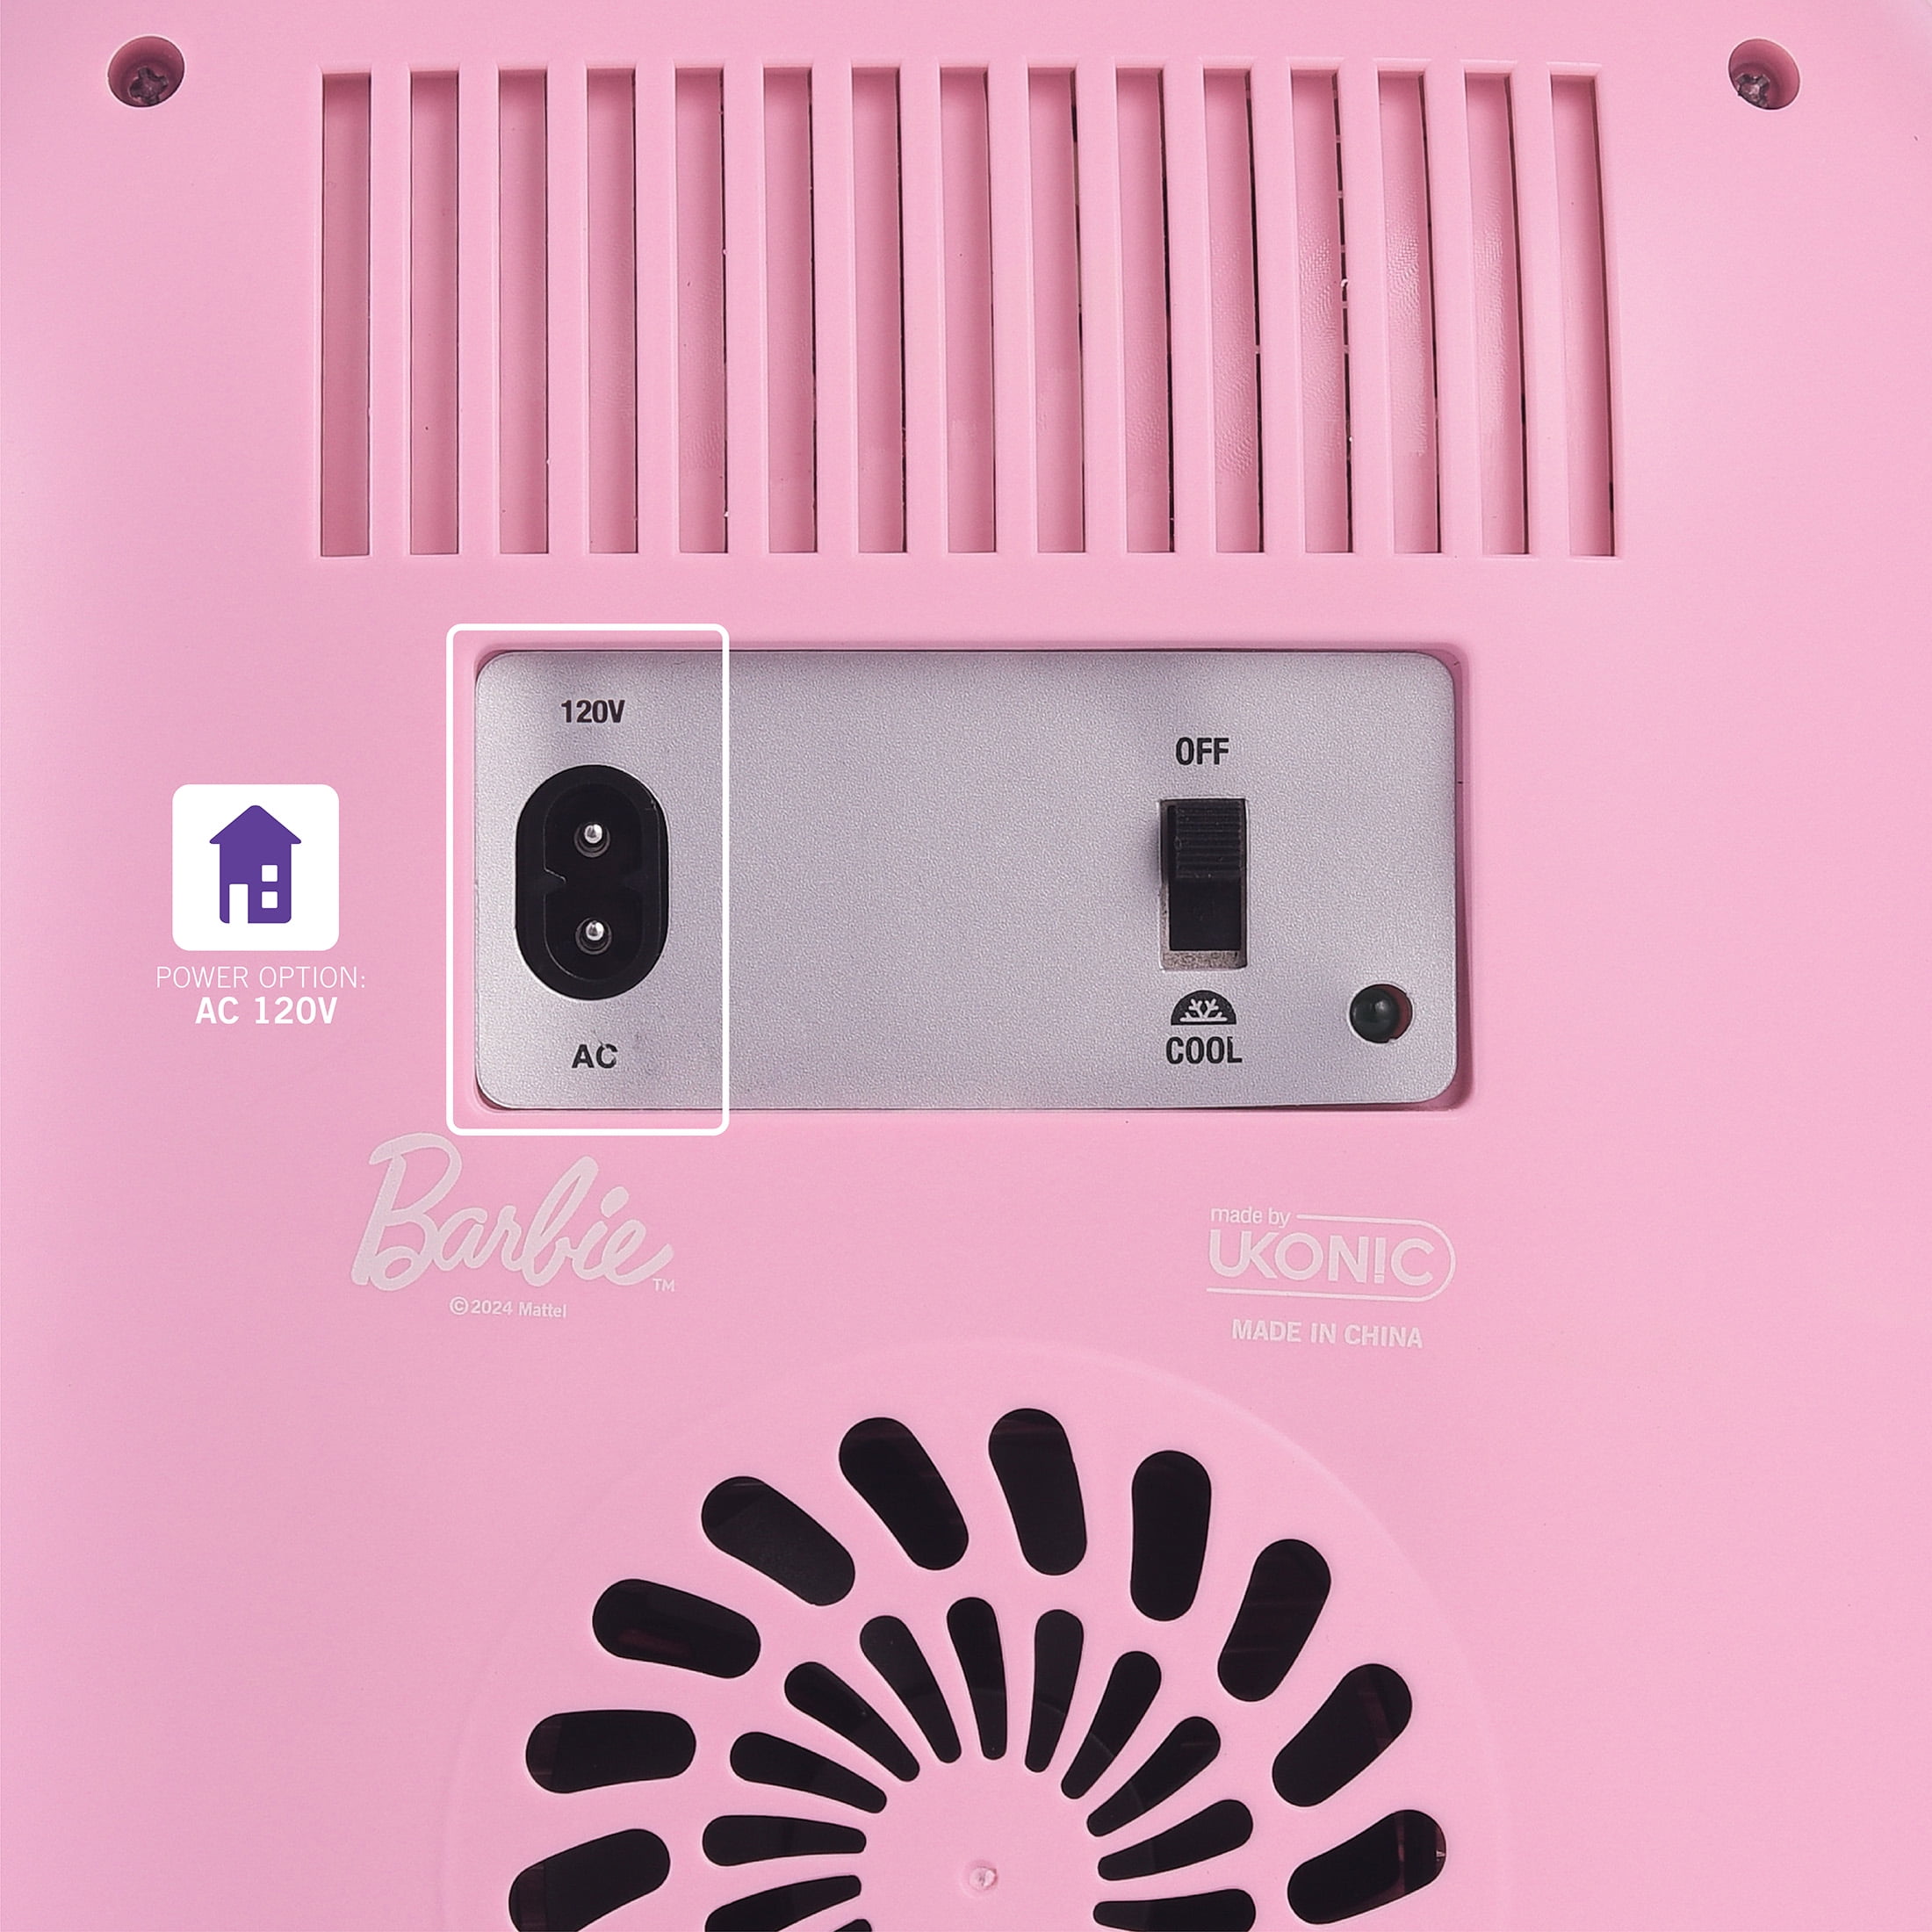 Barbie Hot Pink Malibu 4L Cooler Mini Fridge with Glass Door 6 Can